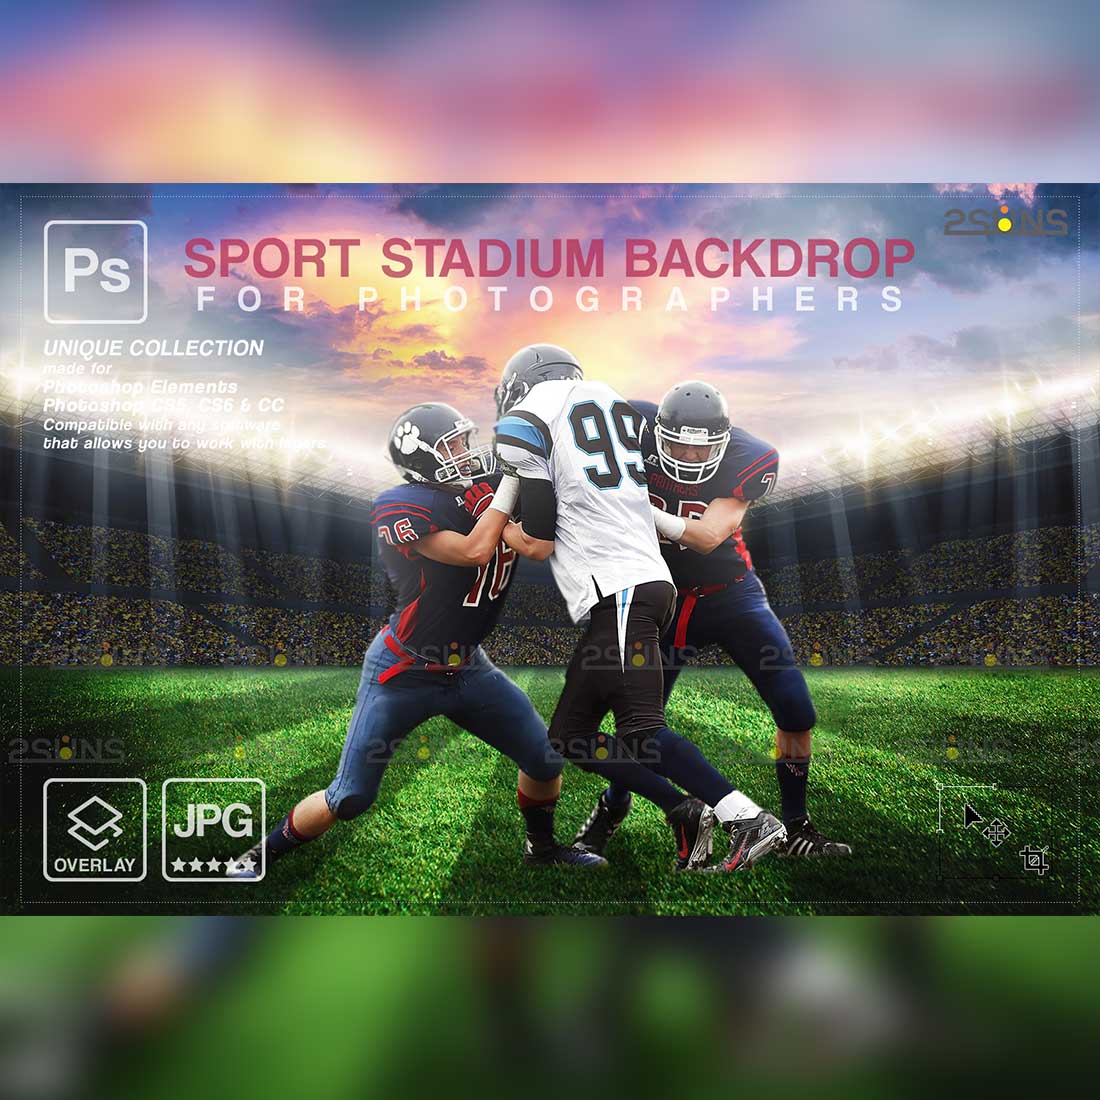 Football Beautiful Backdrop Sports Digital Photoshop Overlay Cover Image.